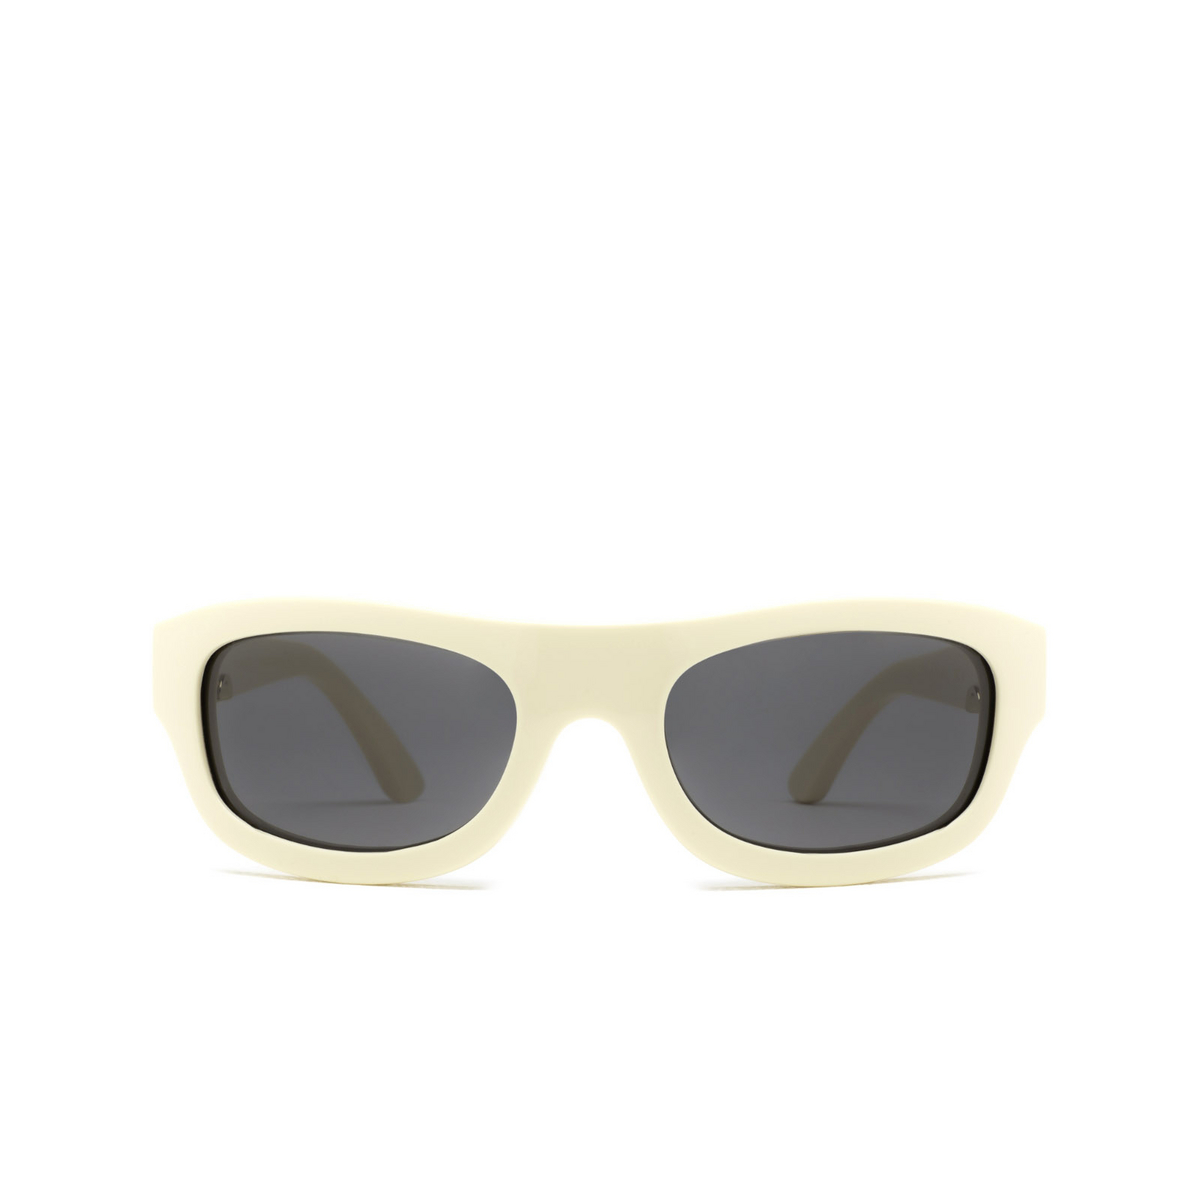 Huma ALI Sunglasses 07 Ivory - front view